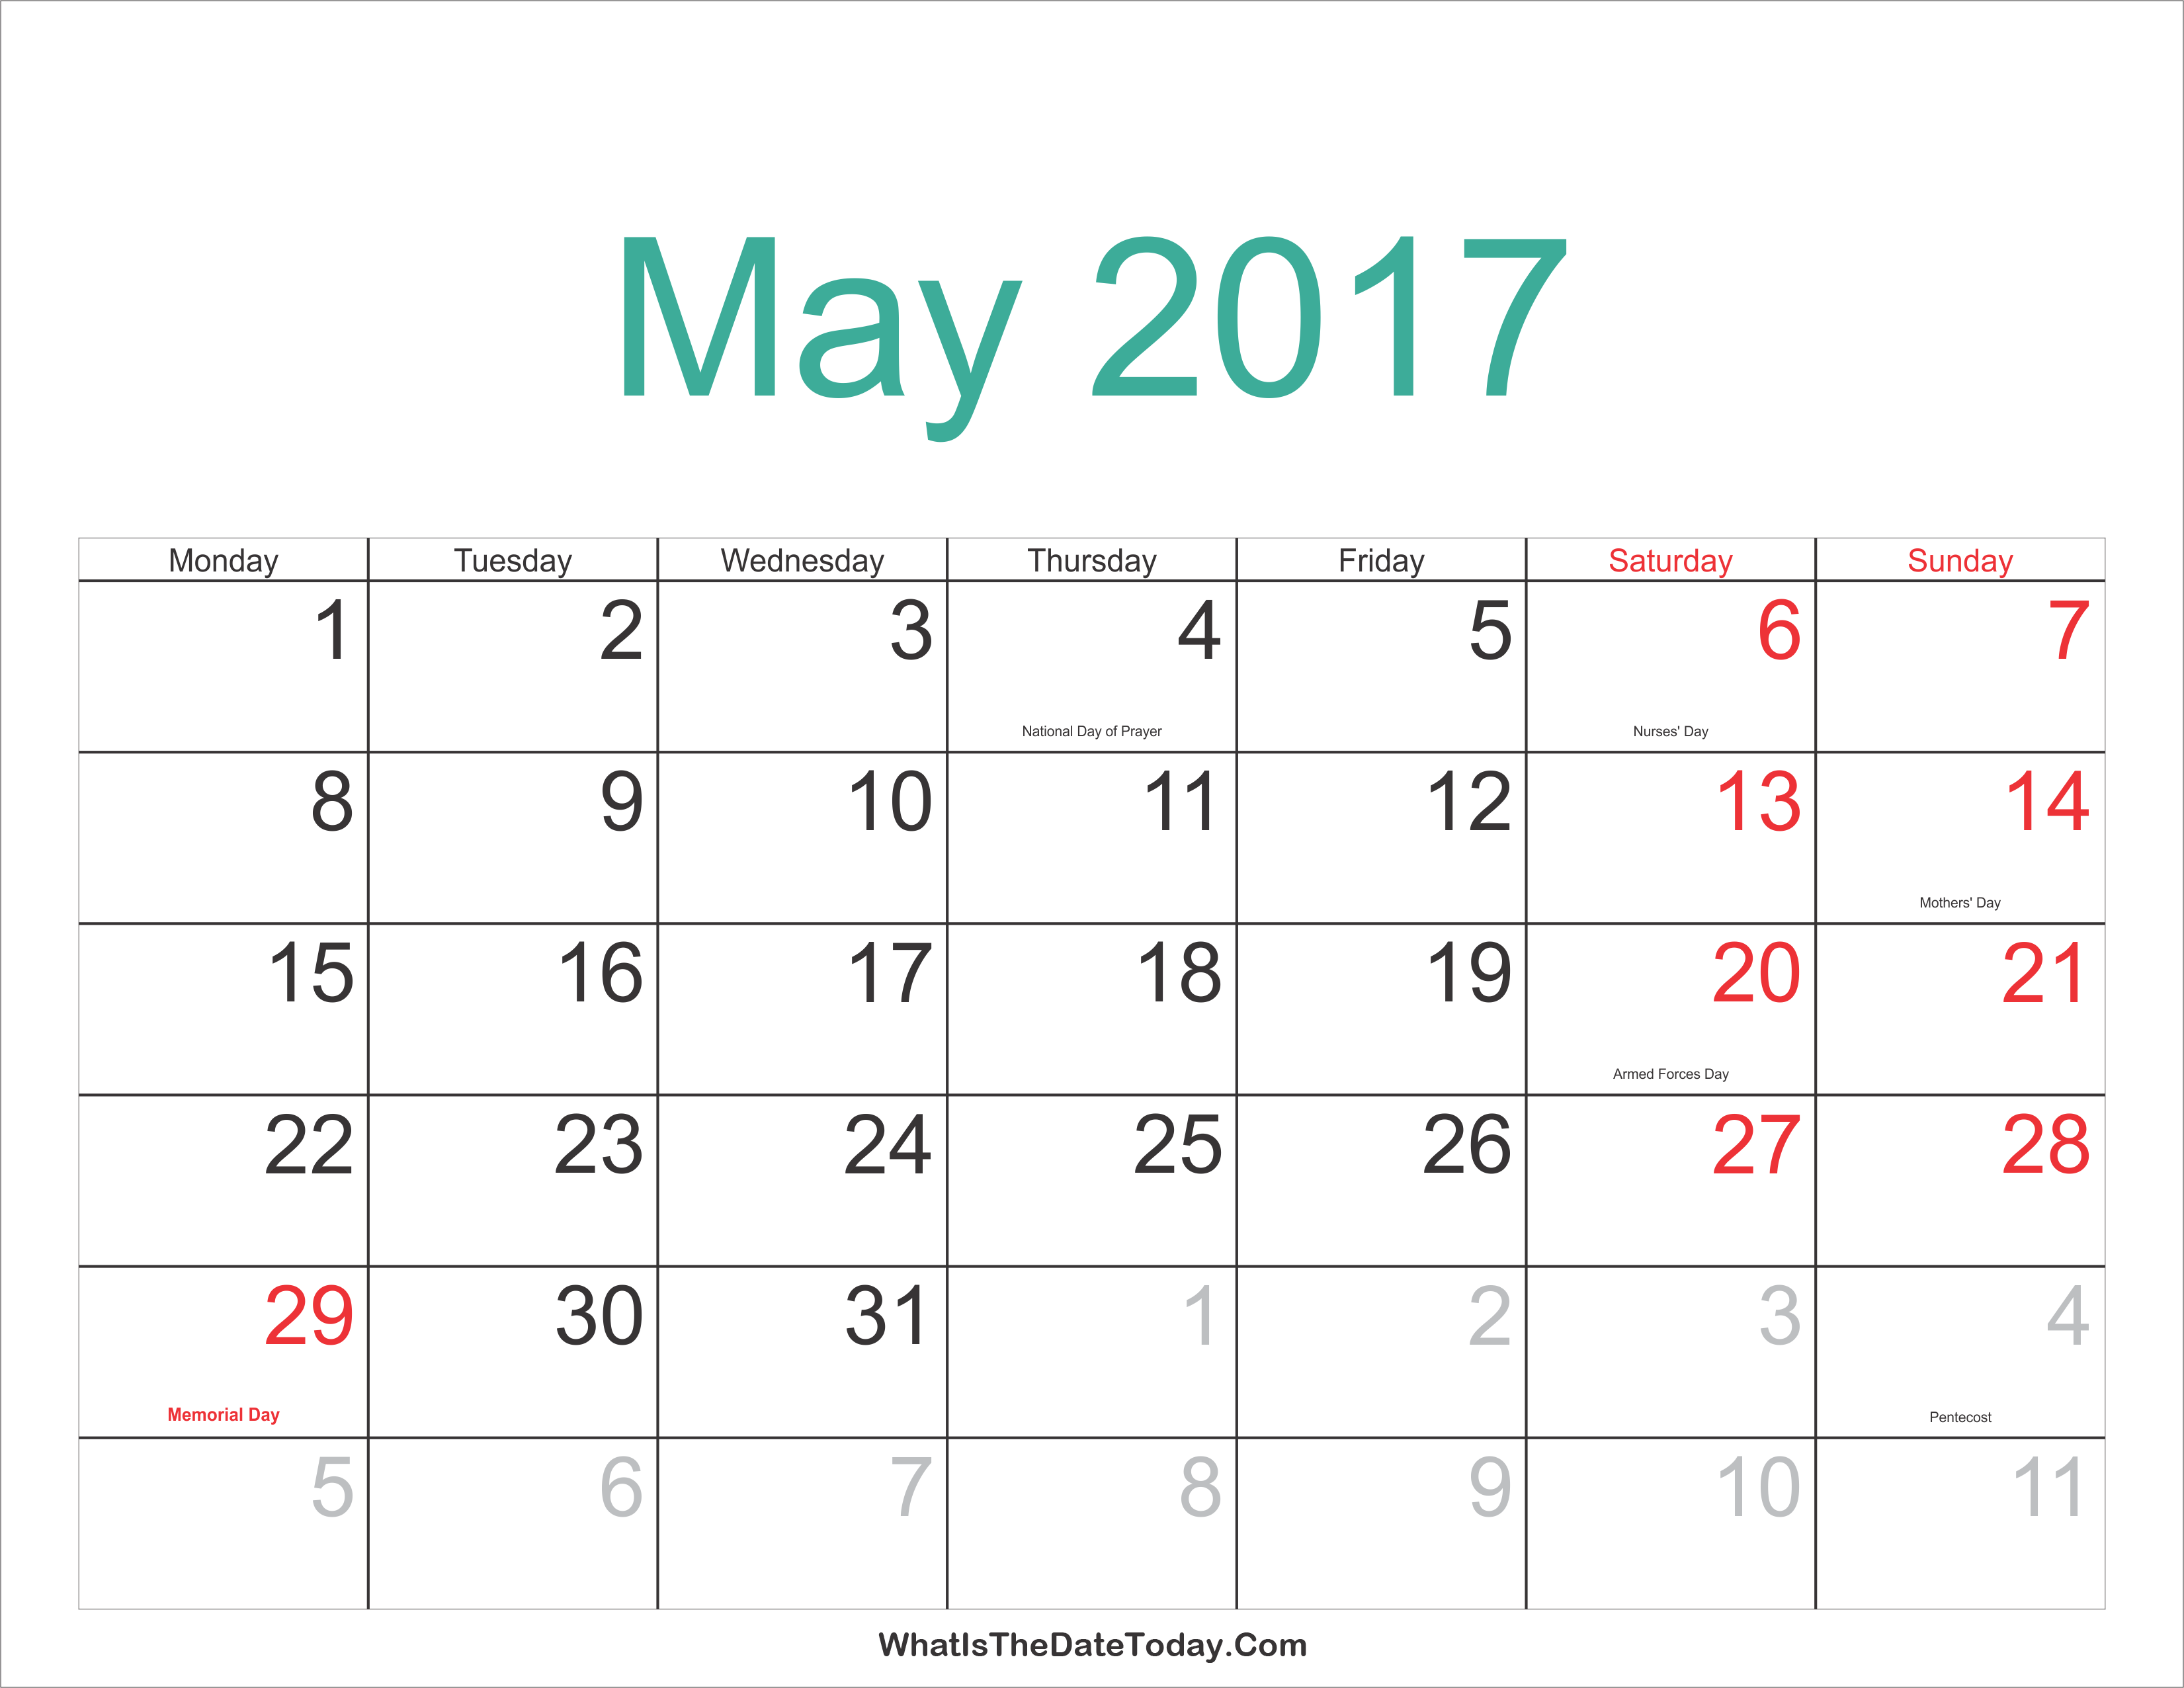 may-2017-calendar-printable-with-holidays-whatisthedatetoday-com